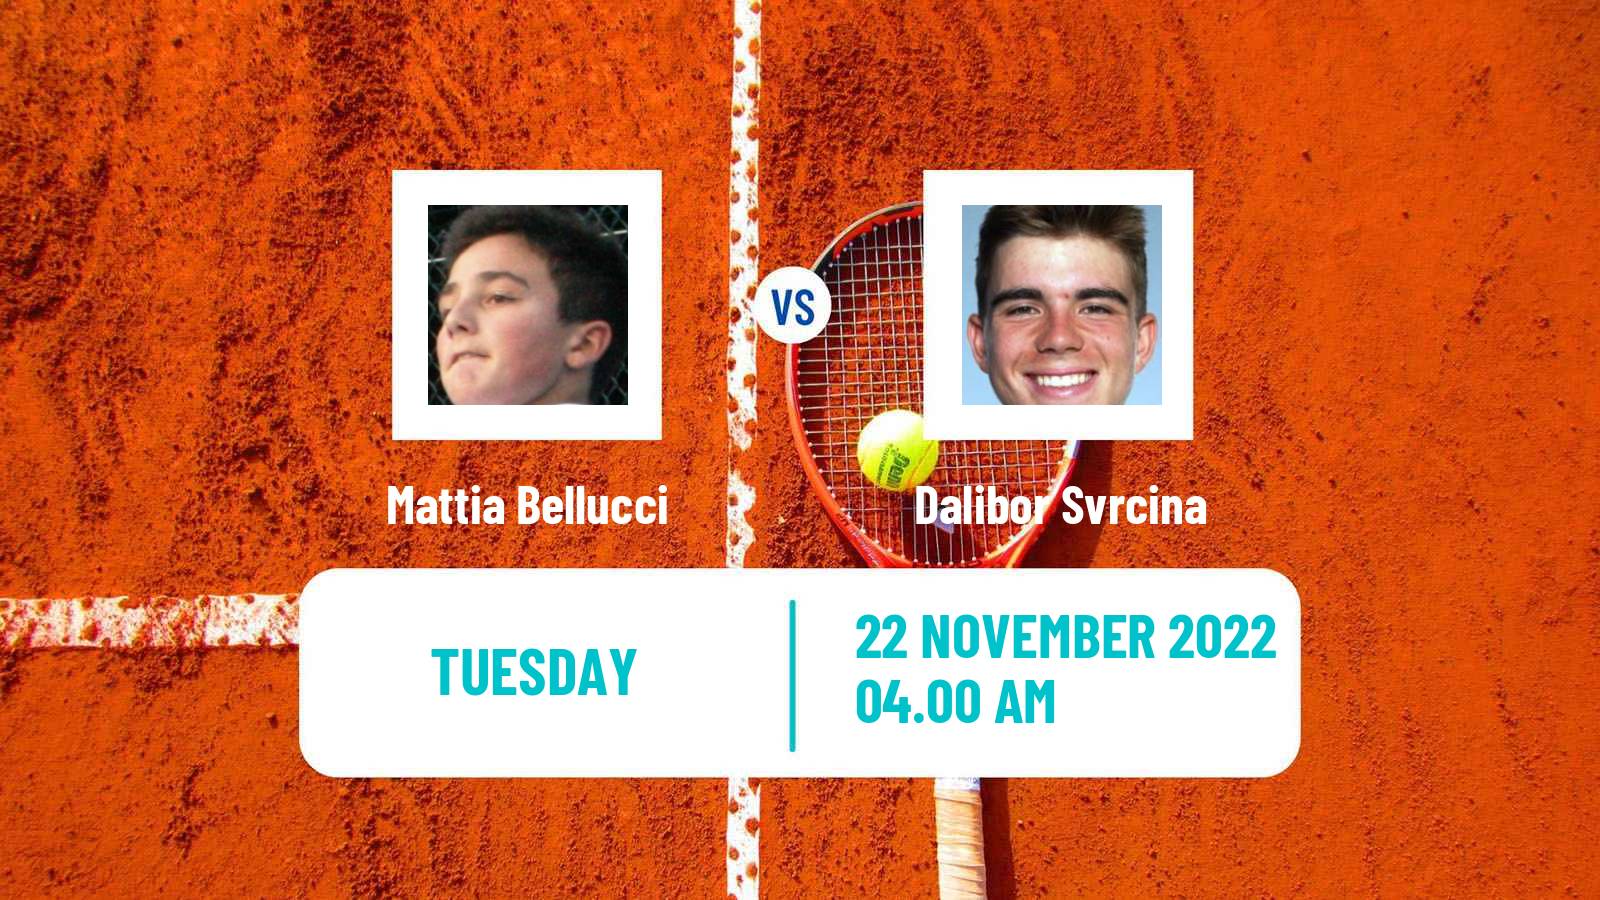 Tennis ATP Challenger Mattia Bellucci - Dalibor Svrcina